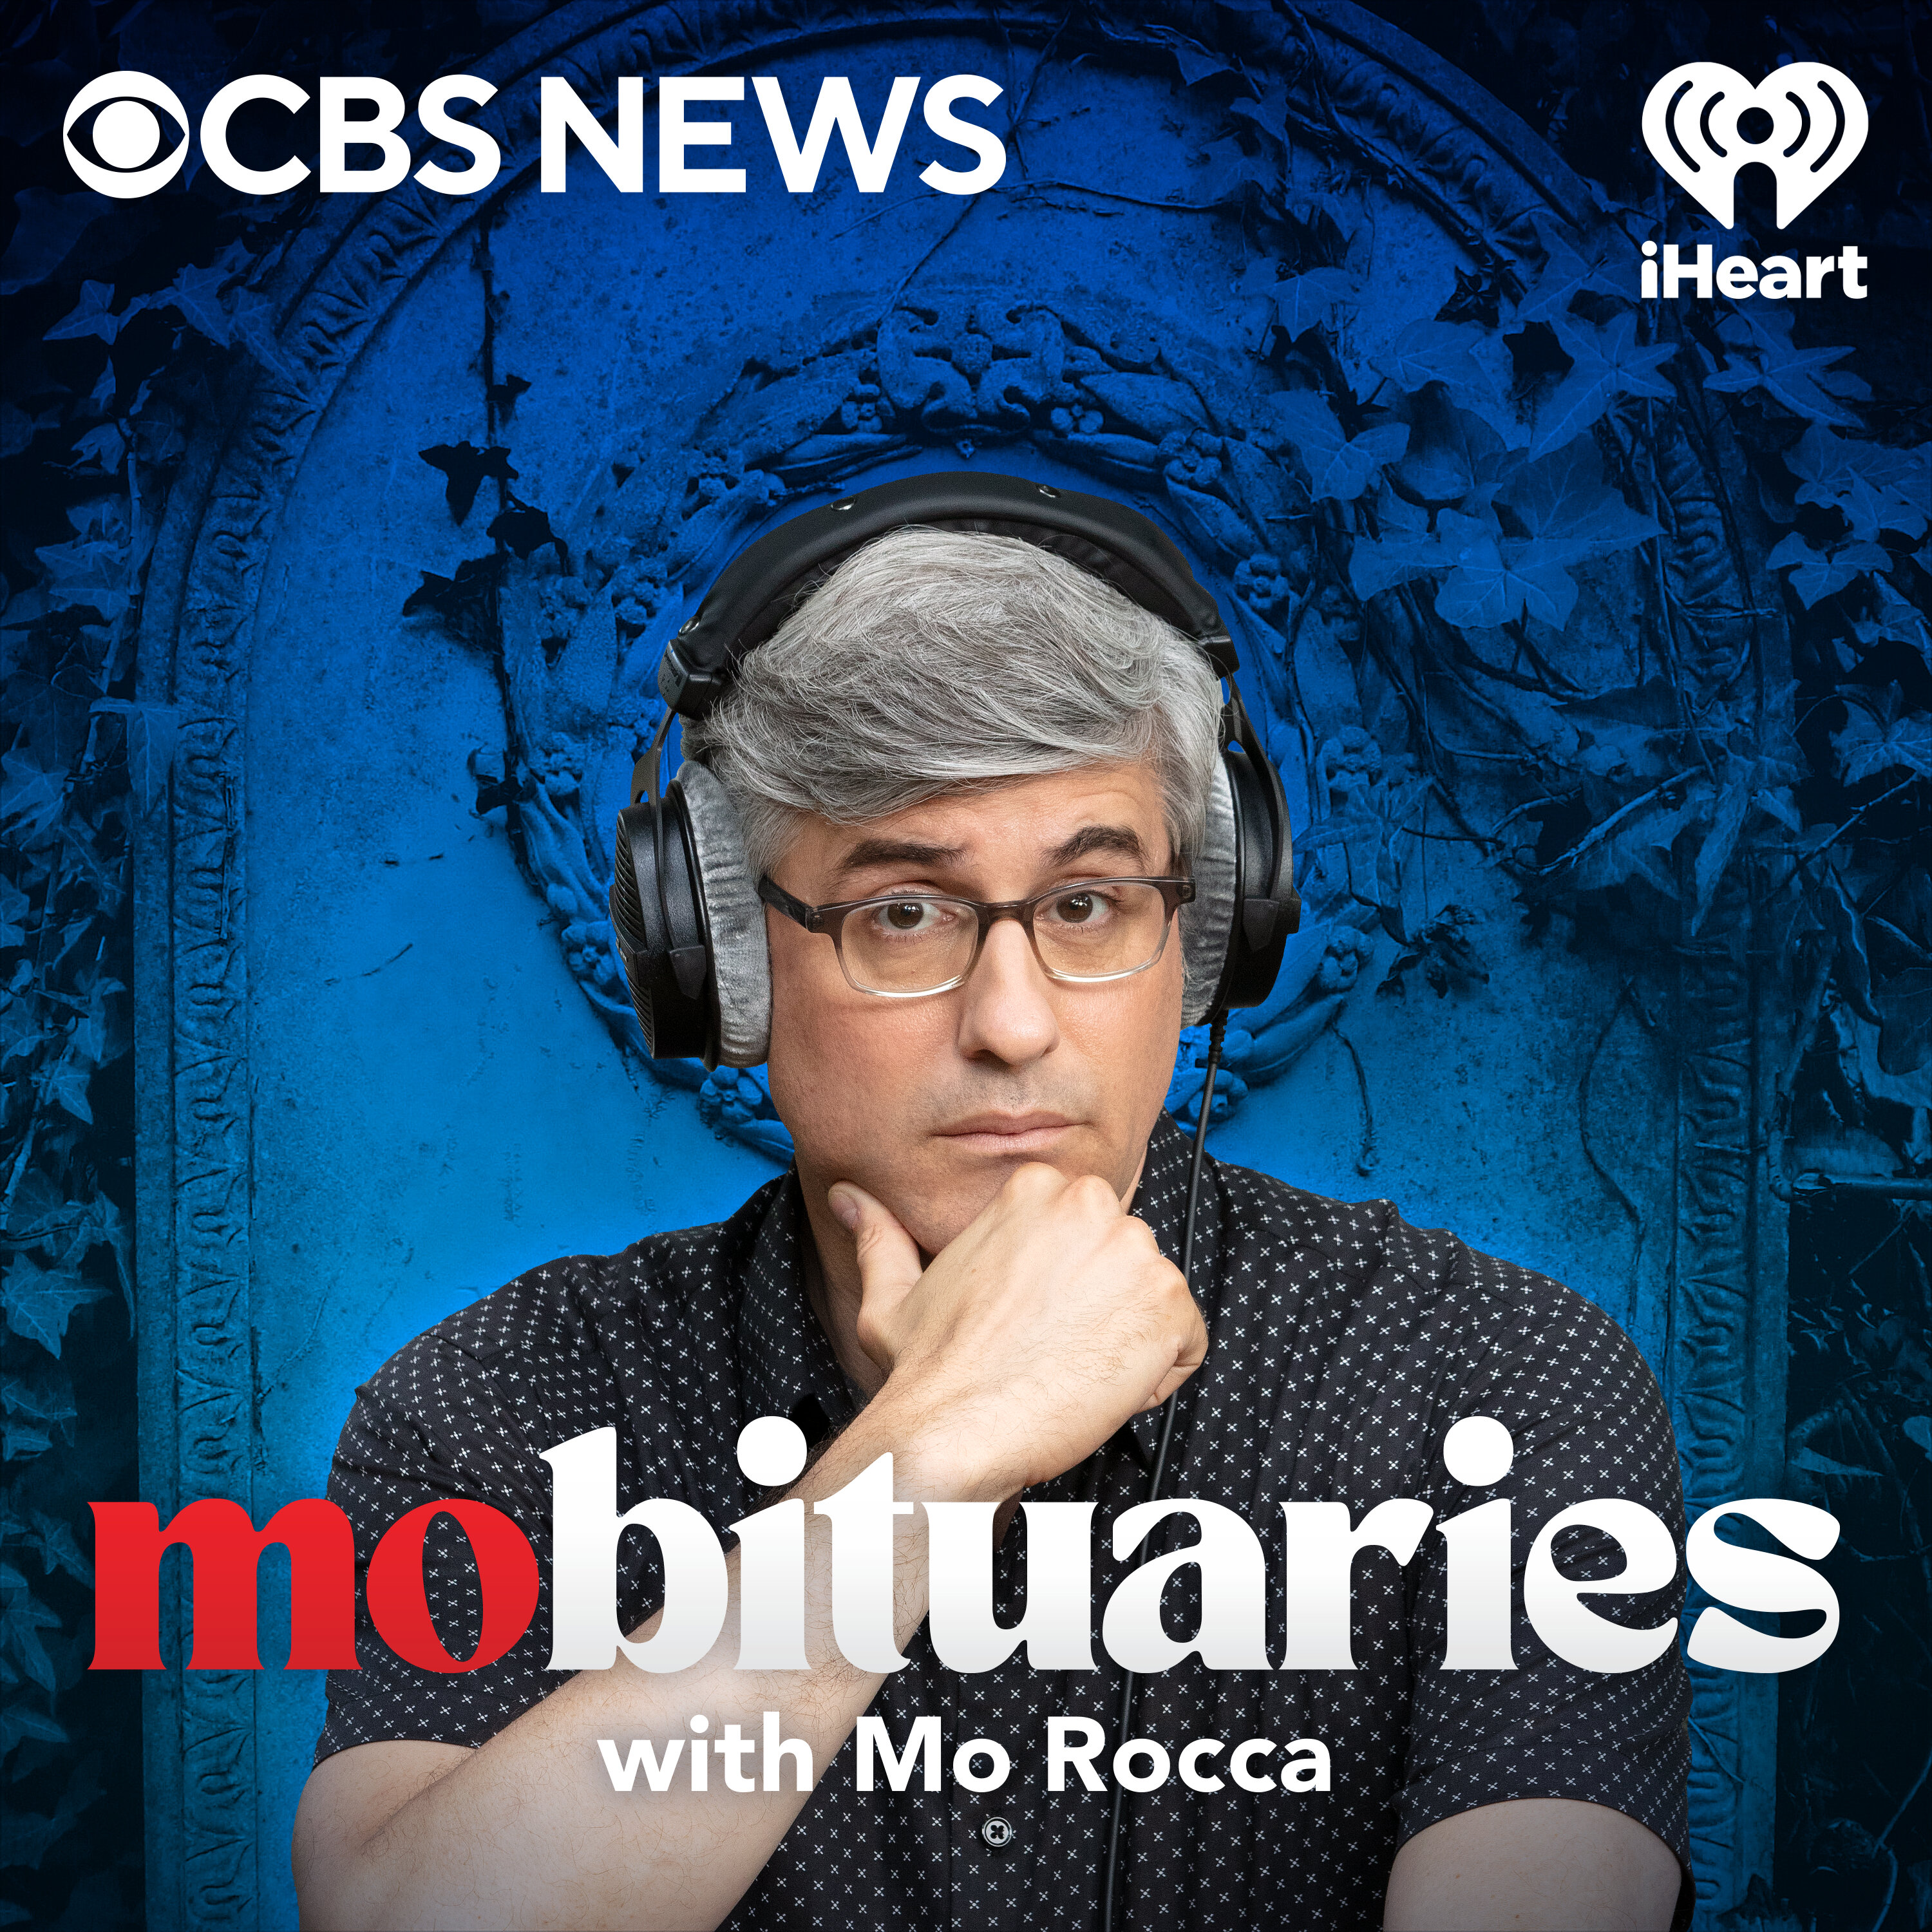 Mobituaries with Mo Rocca Season 1 Trailer